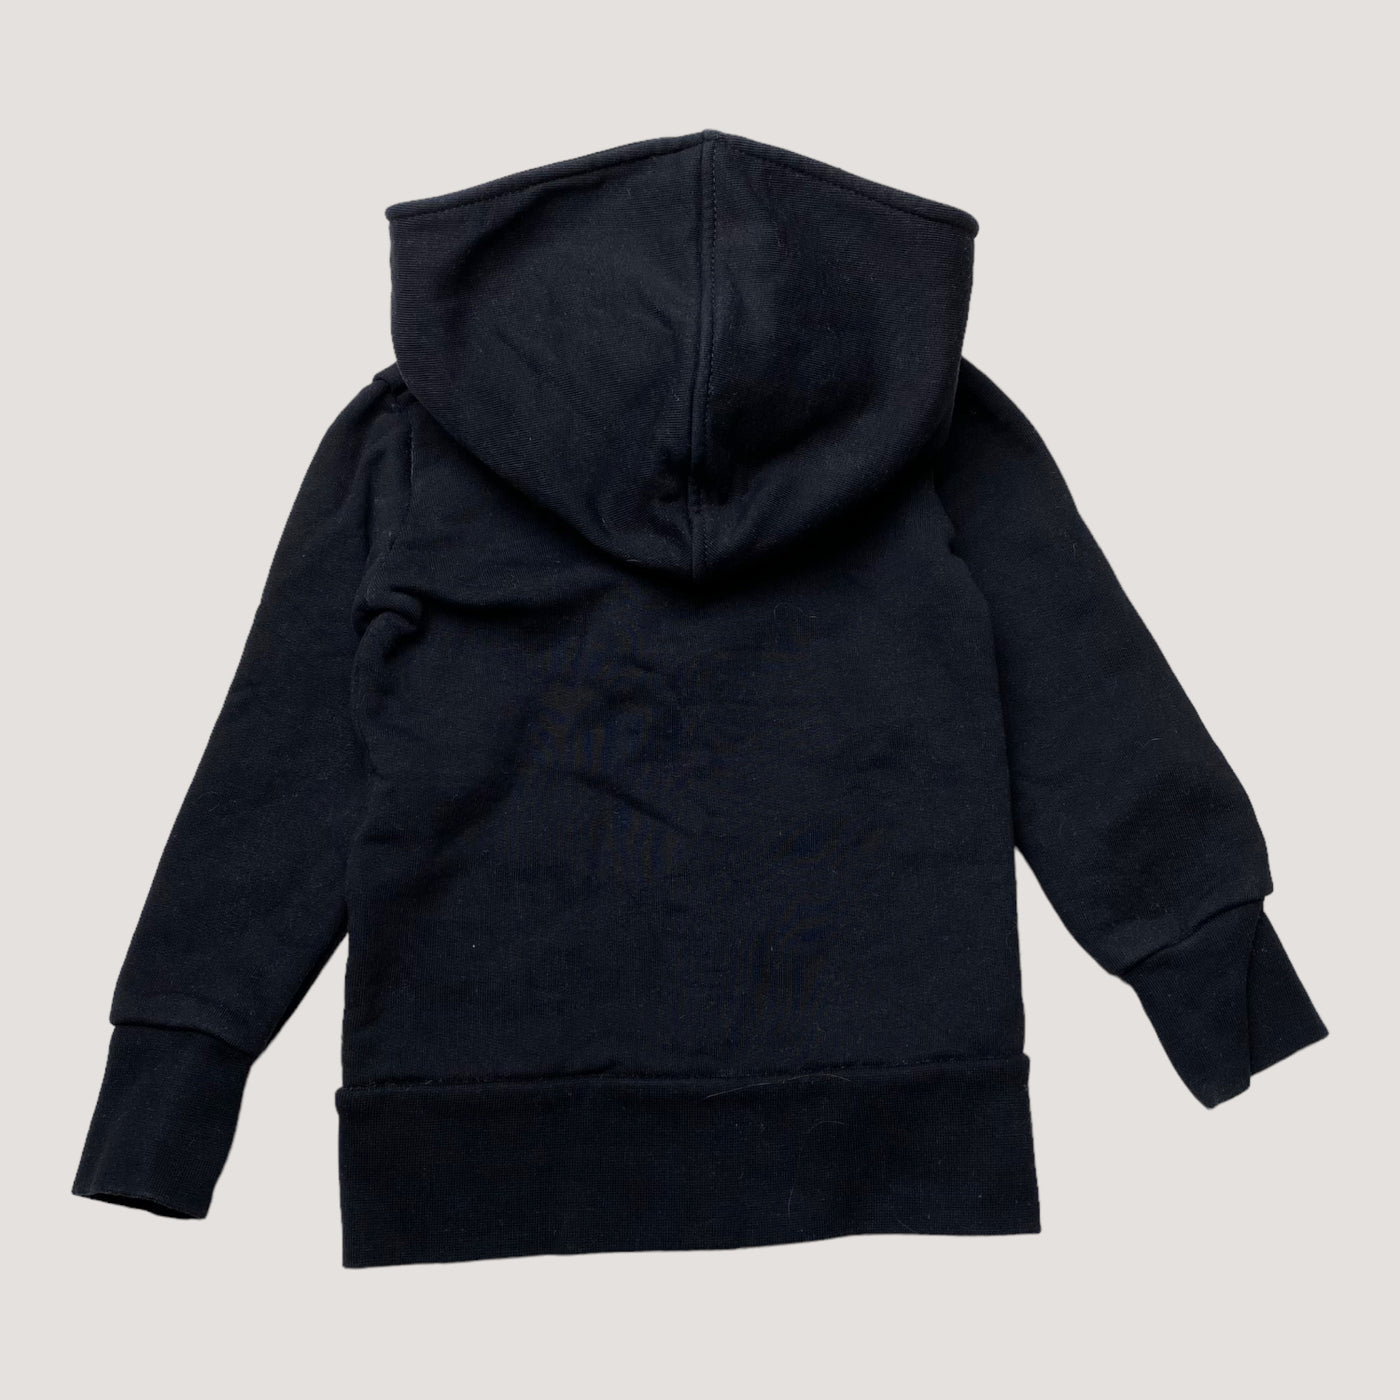 Gugguu zipper hoodie, black | 98cm